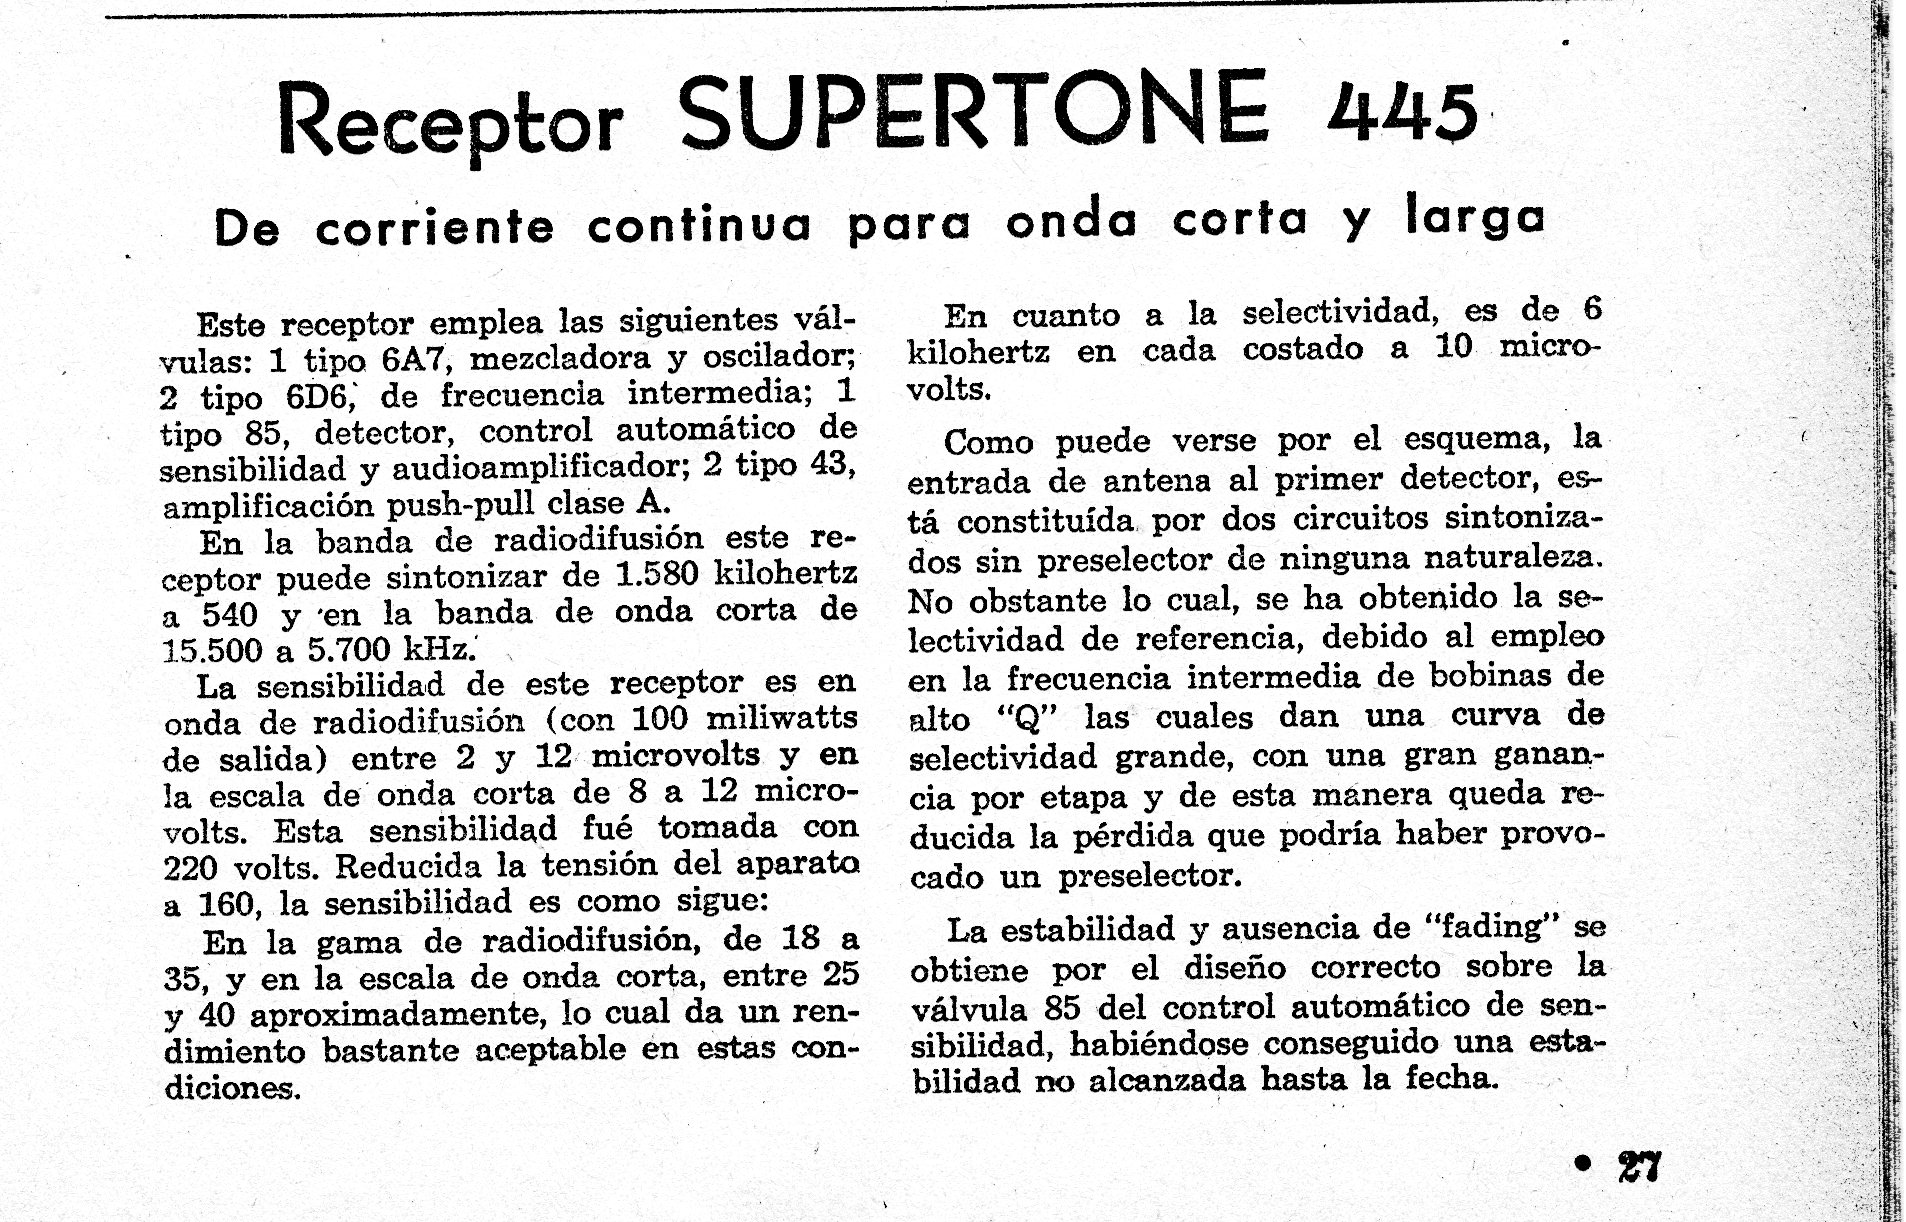 Supertone002.jpg